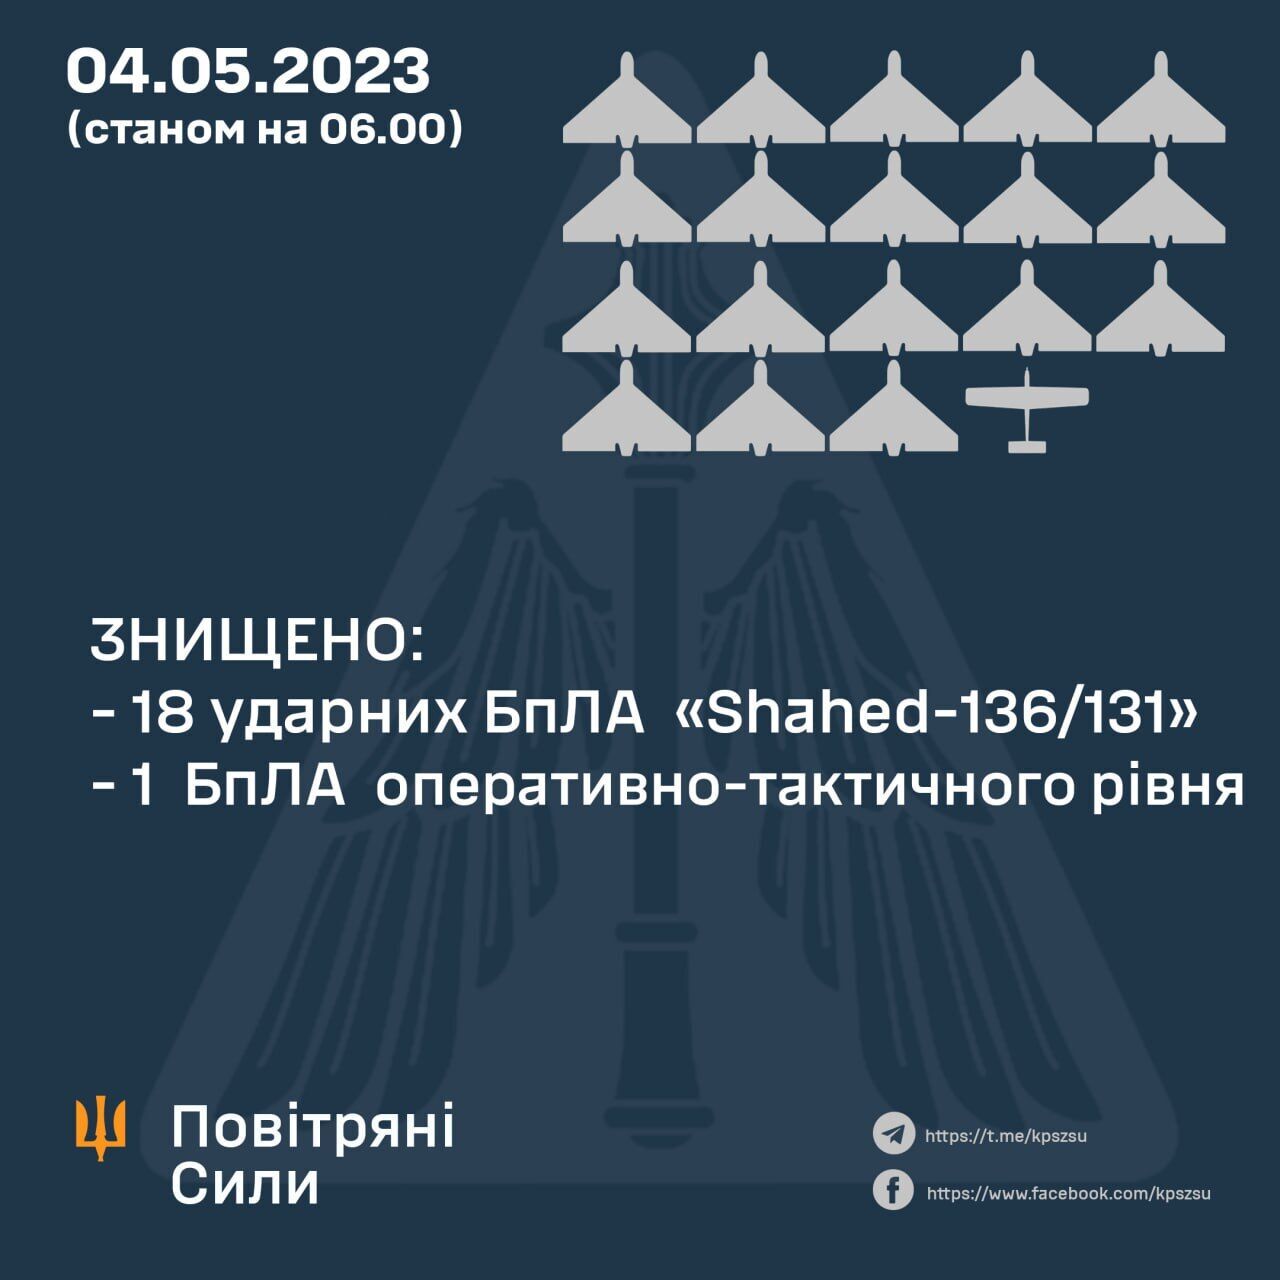 Окупанти атакували Україну 24 дронами, 18 збили сили ППО 